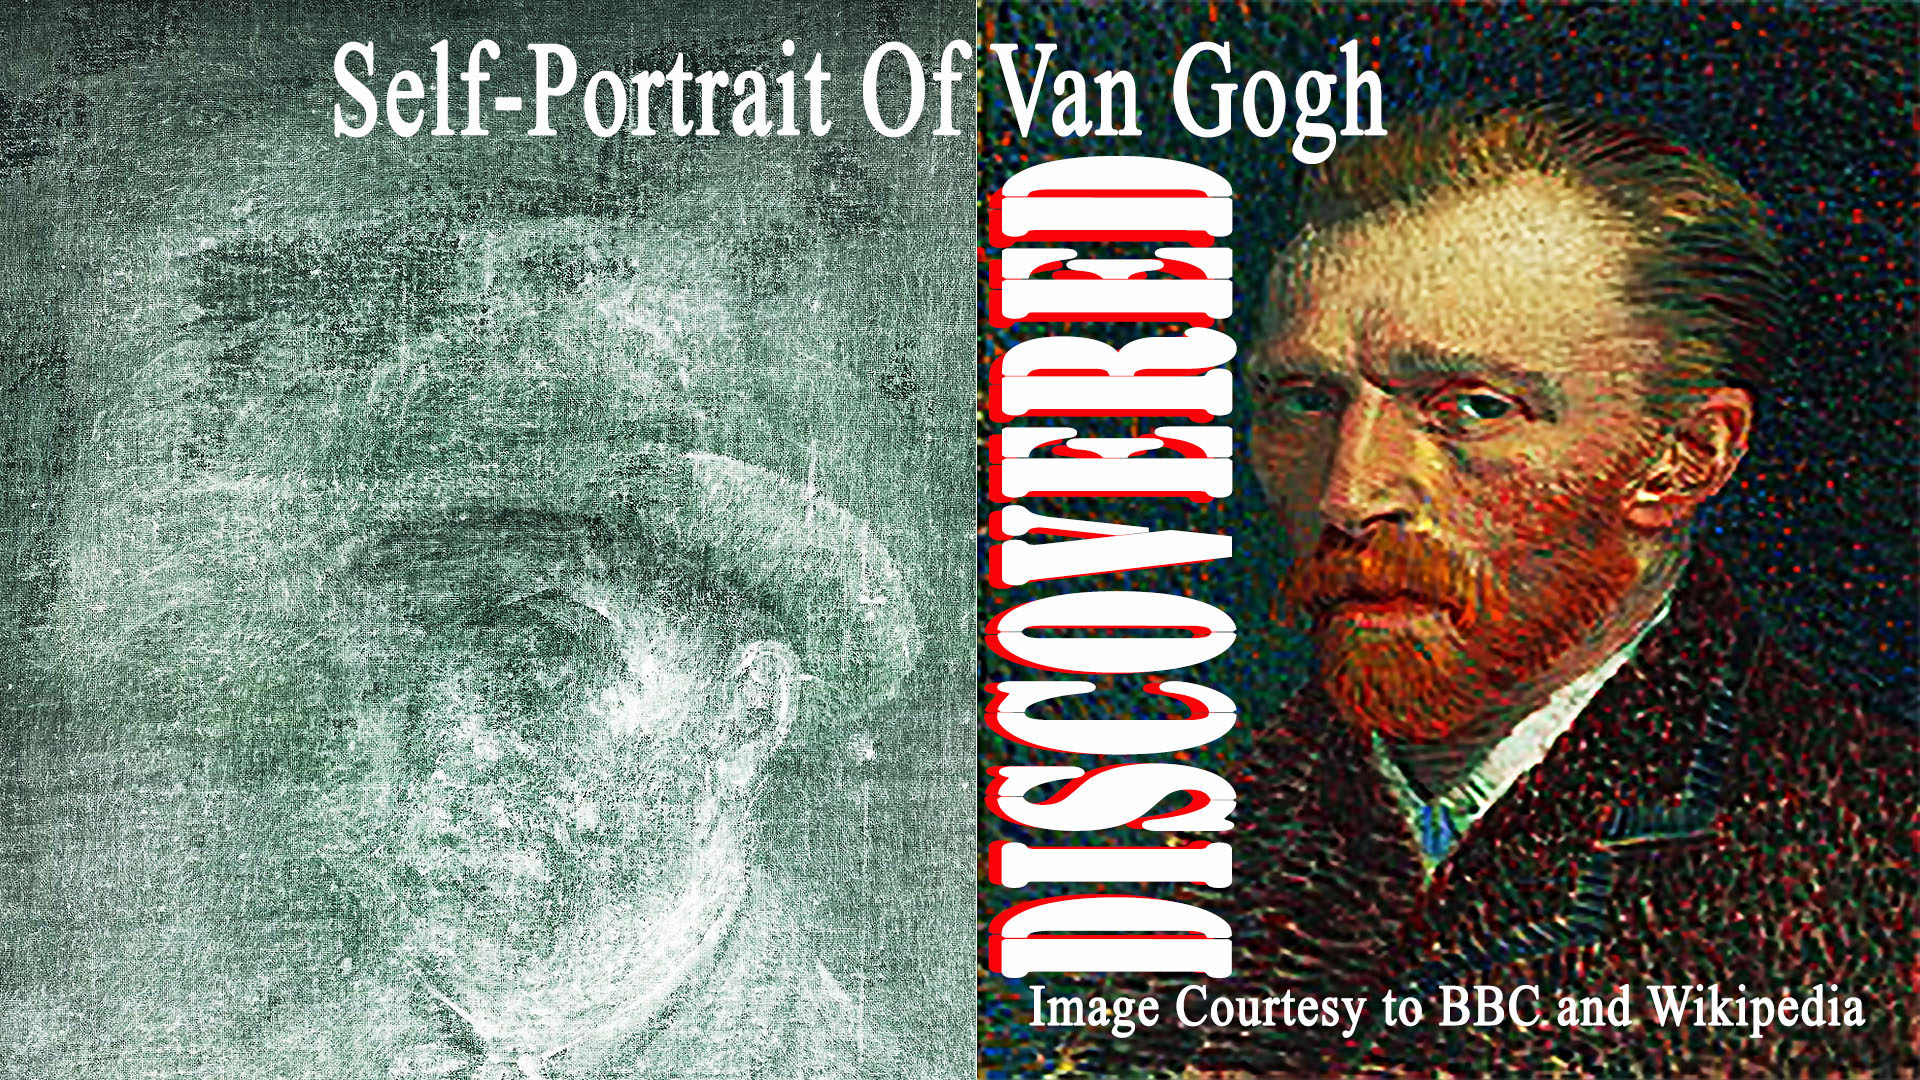 Self-portrait by Vincent Van Gogh discovered 